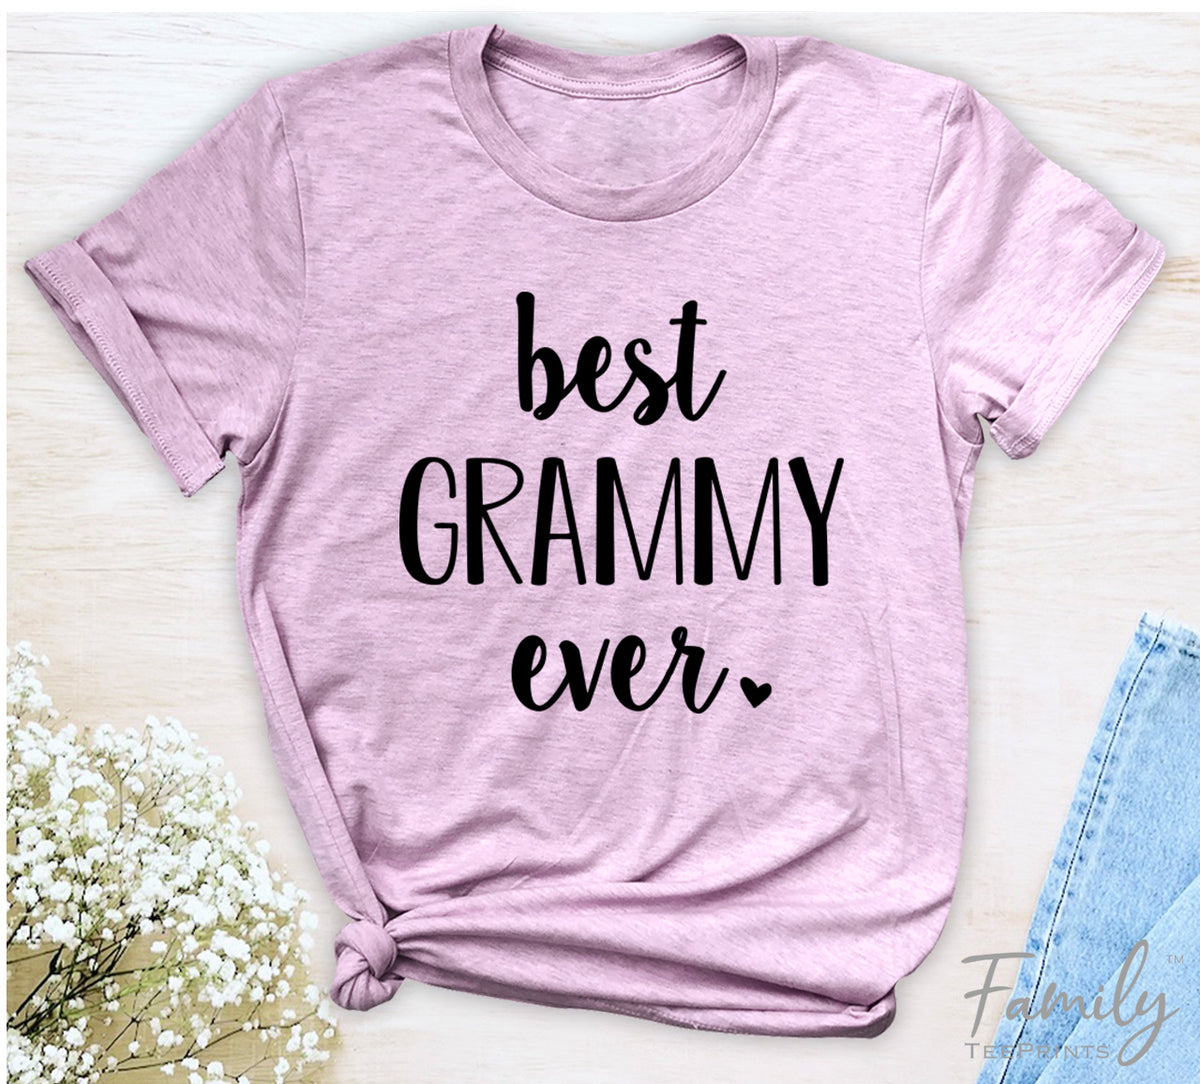 Best Grammy Ever - Unisex T-shirt - Grammy Shirt - Gift For New Grammy - familyteeprints